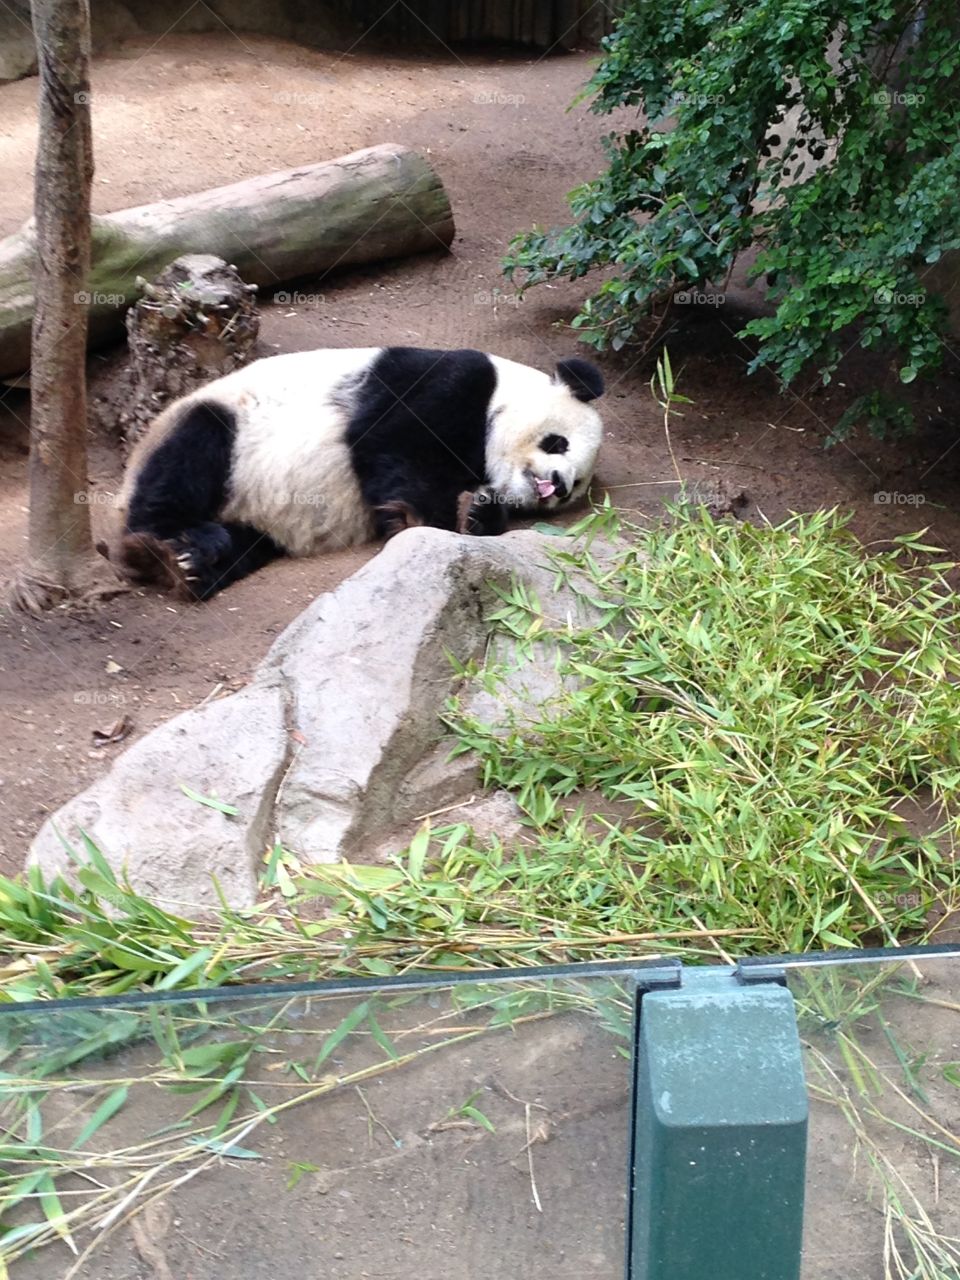 Mr panda